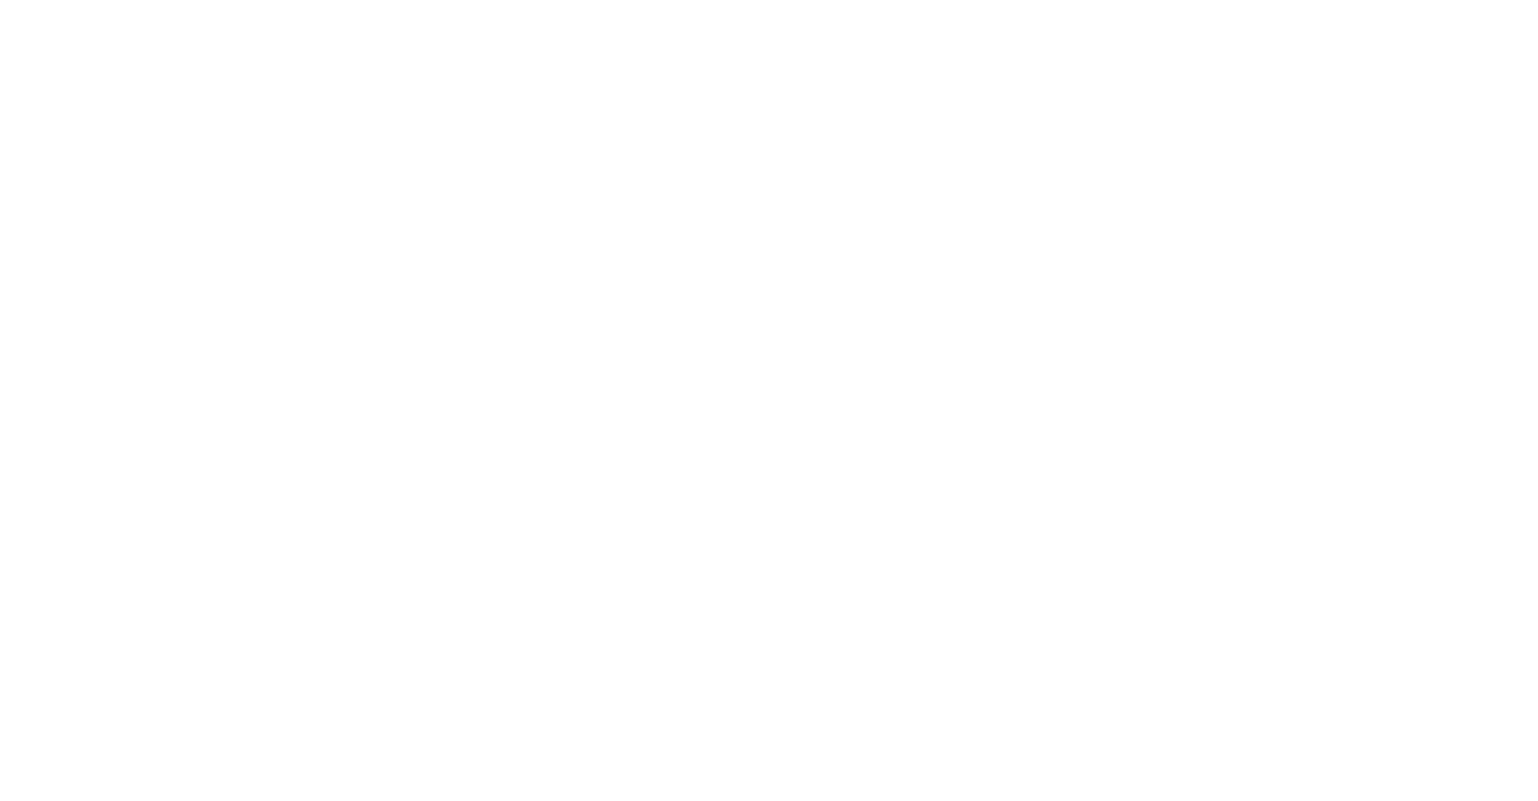 Arabian Drilling Company logo large for dark backgrounds (transparent PNG)